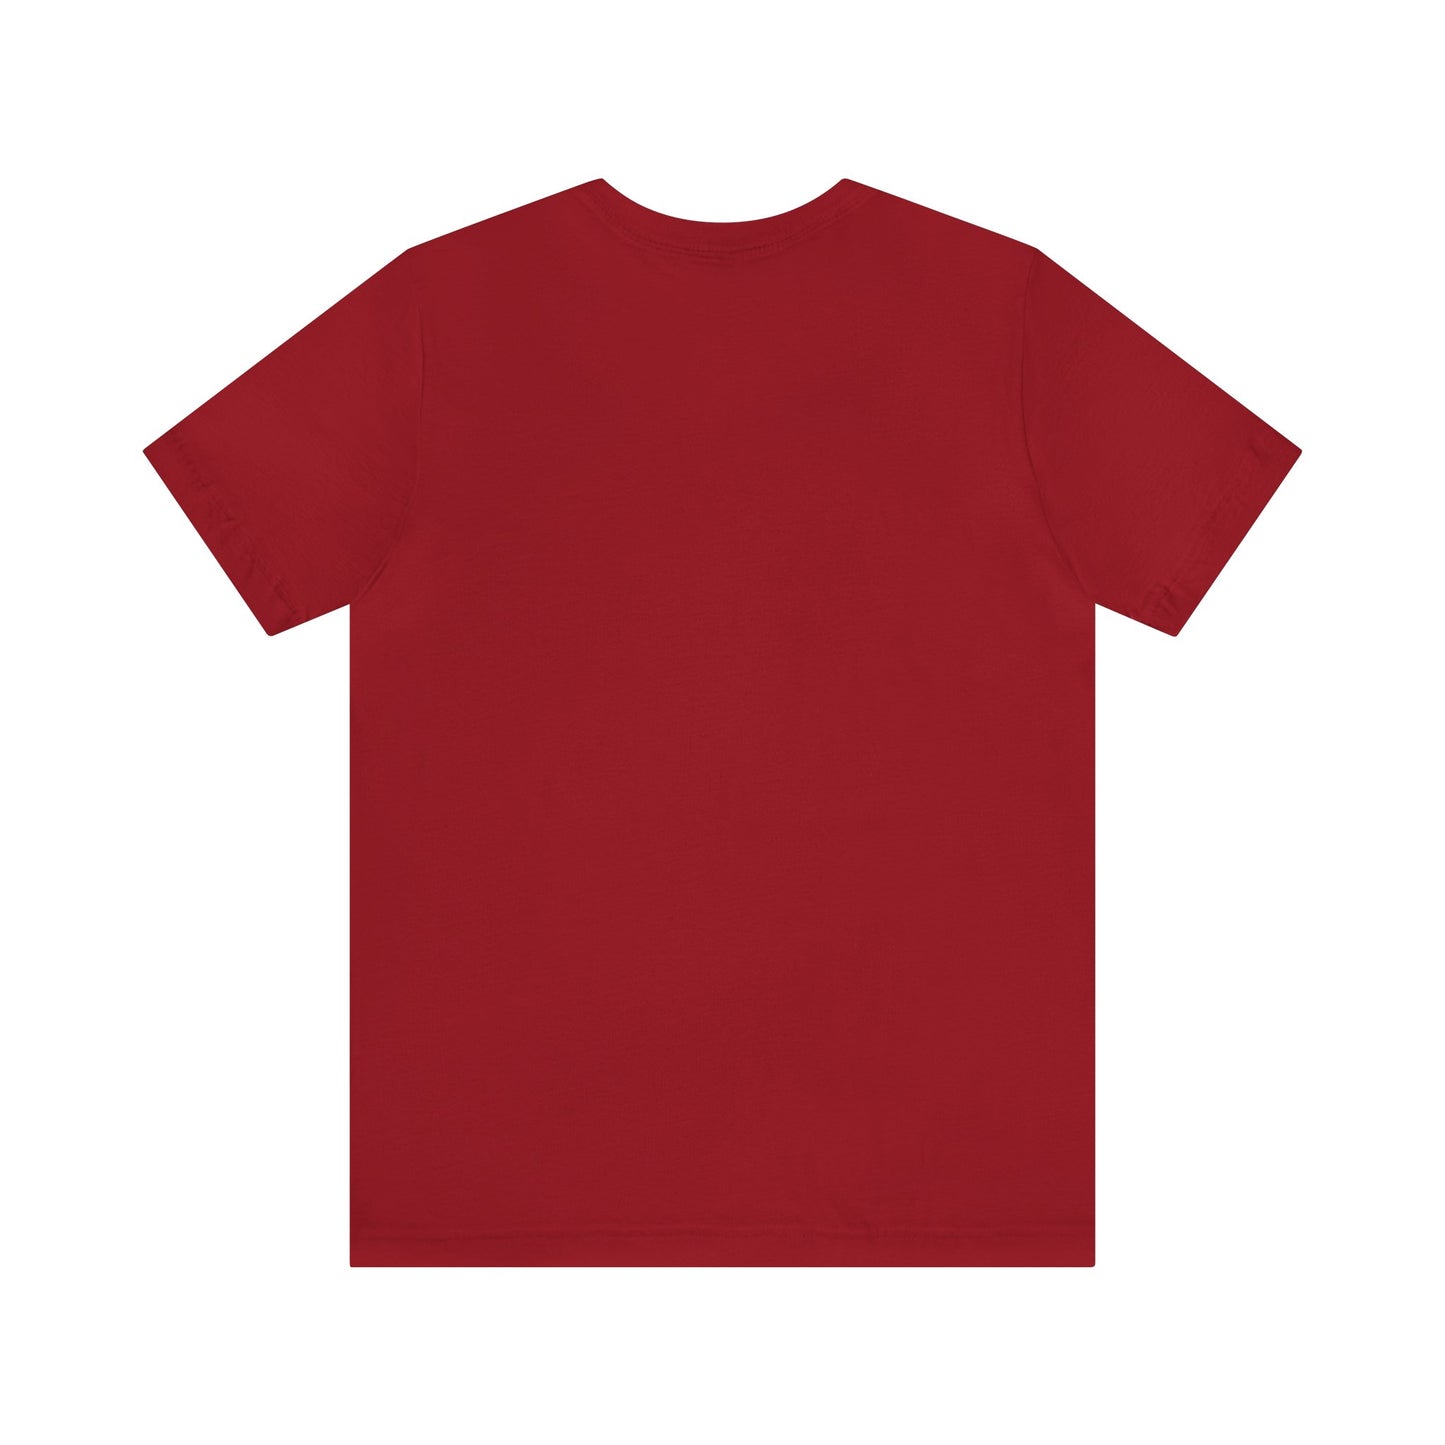 Unisex Jersey Short Sleeve Canvas Red T Shirt